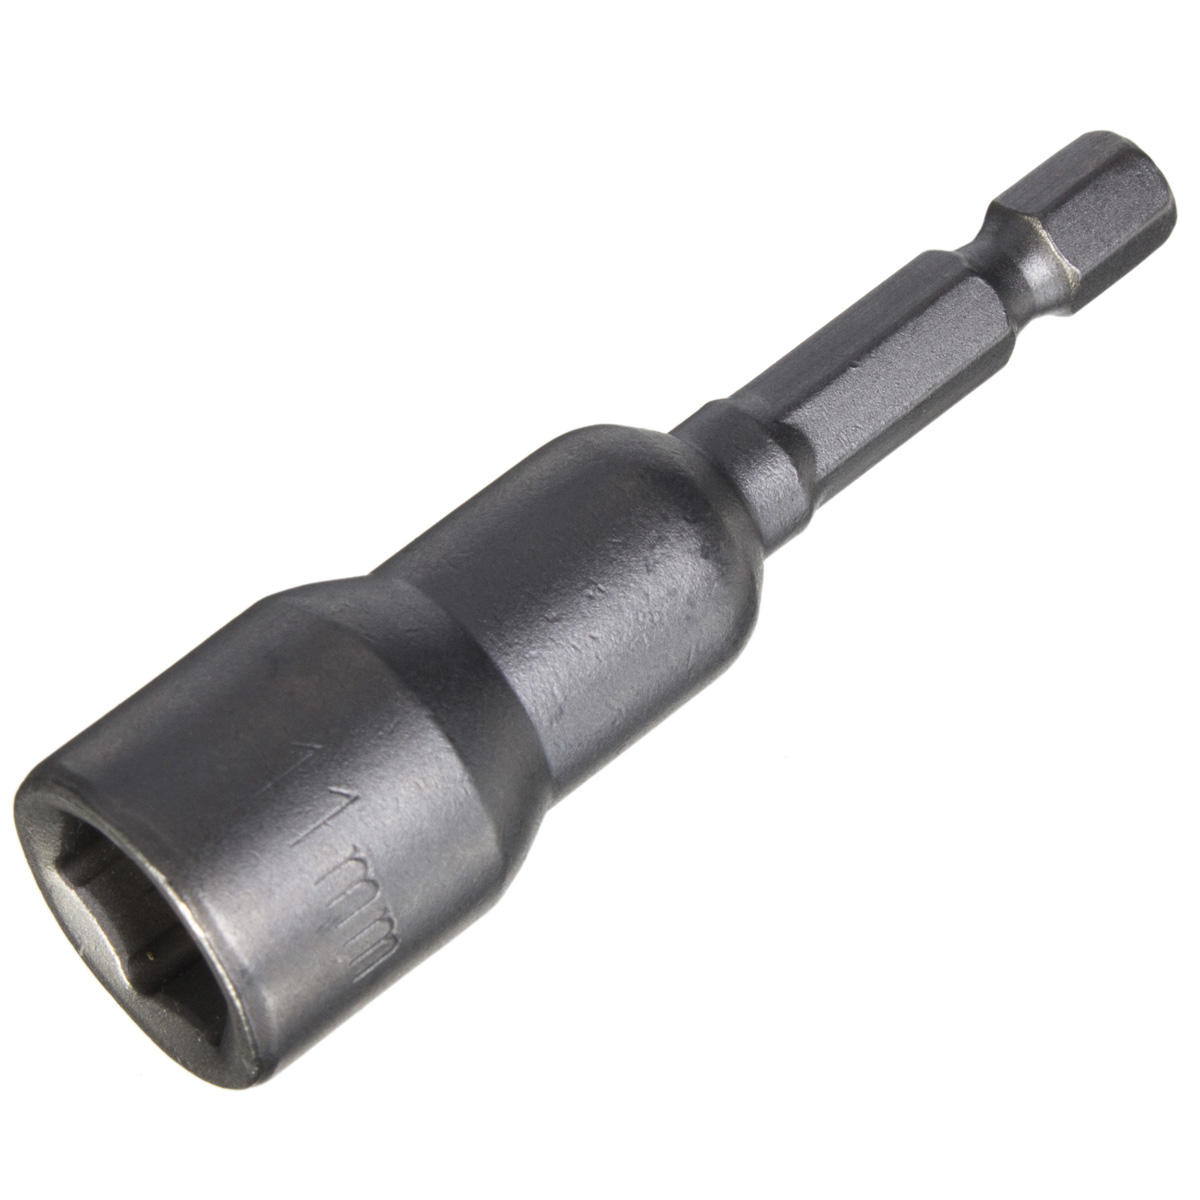 

65mm 1/4 Inch Hex Socket Magnetic Nut Driver Setter 6mm-19mm Drill Bit Адаптер